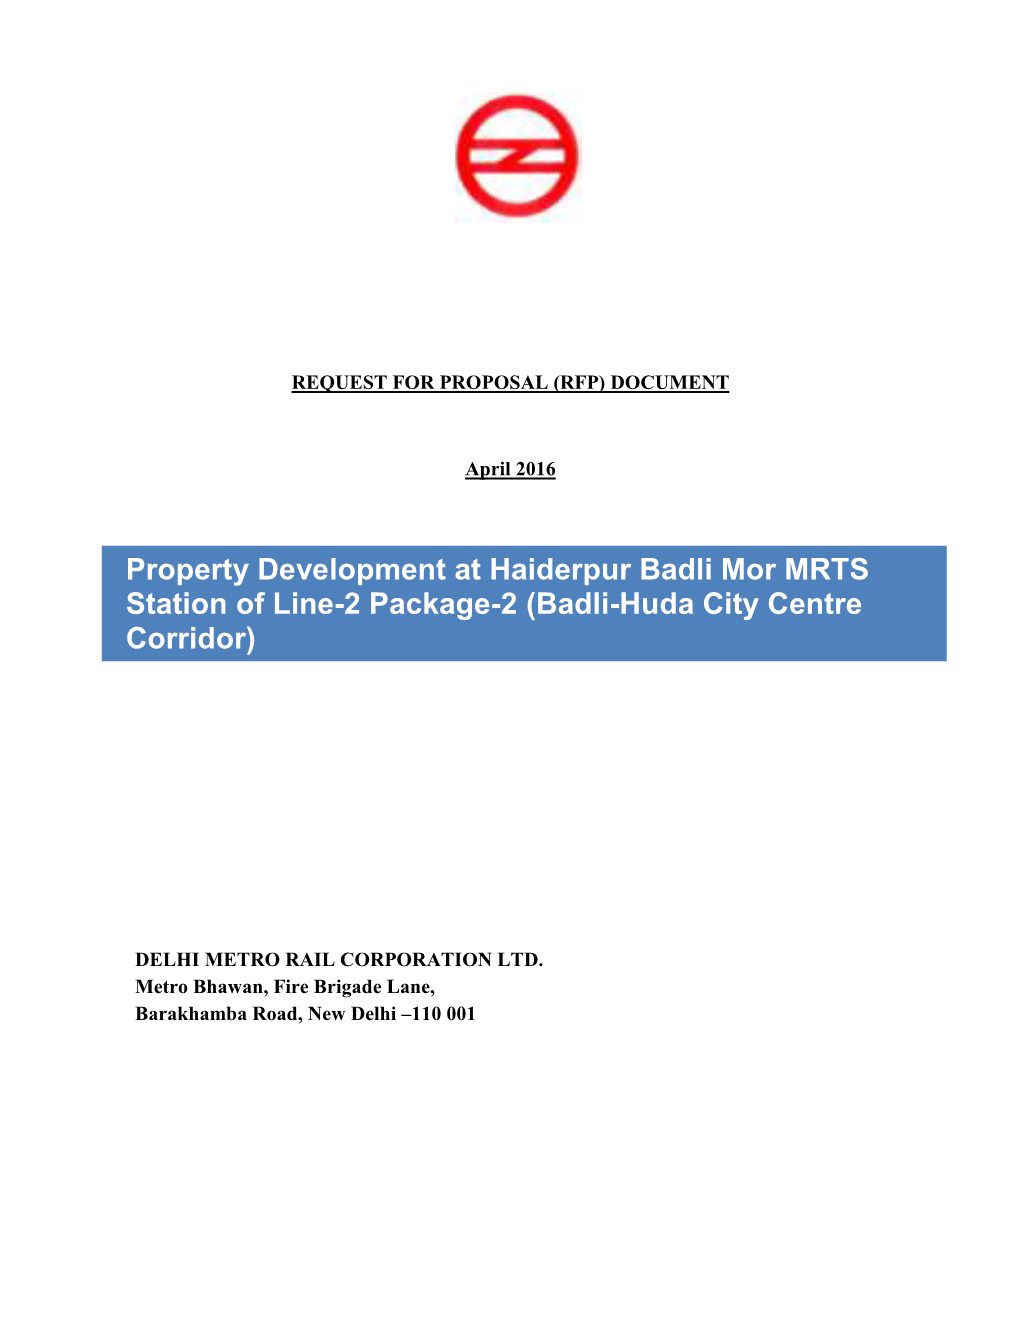 Property Development at Haiderpur Badli Mor MRTS Station of Line-2 Package-2 (Badli-Huda City Centre Corridor)